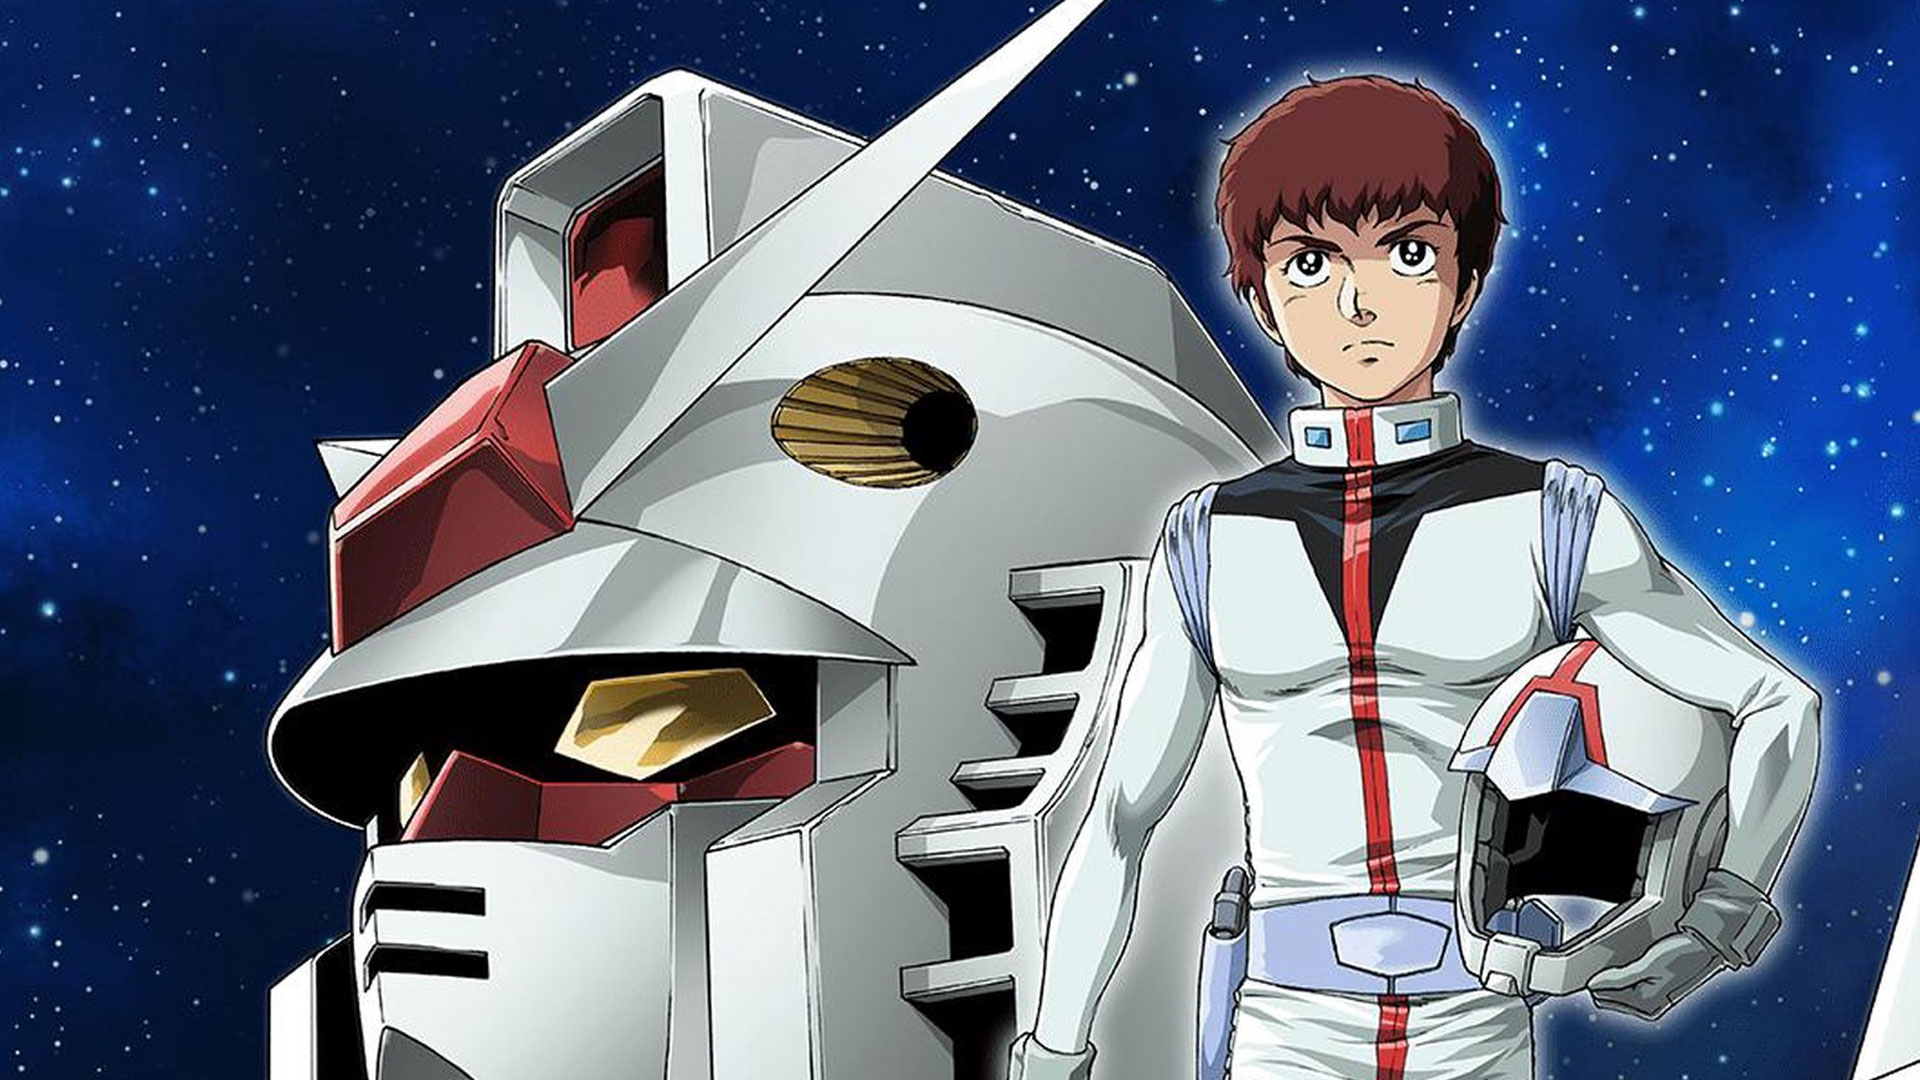 Mobile Suit Gundam Franchise, Explained for New Fans